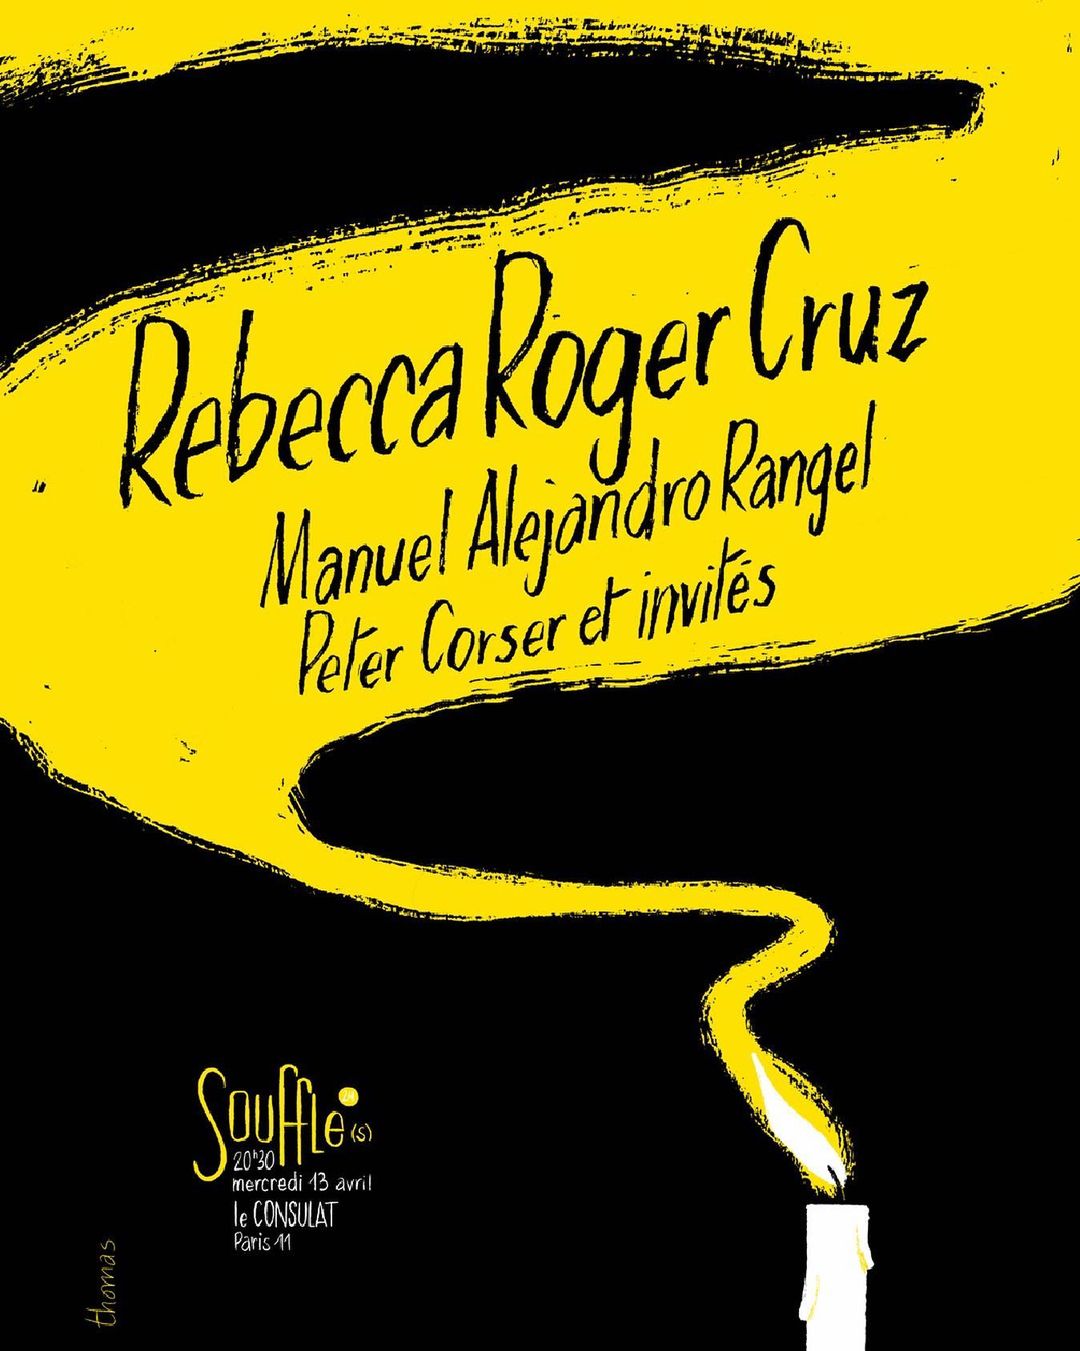 Souffle(s) #24 : Rebecca Roger Cruz, Manuel Alejandro Rangel & guest